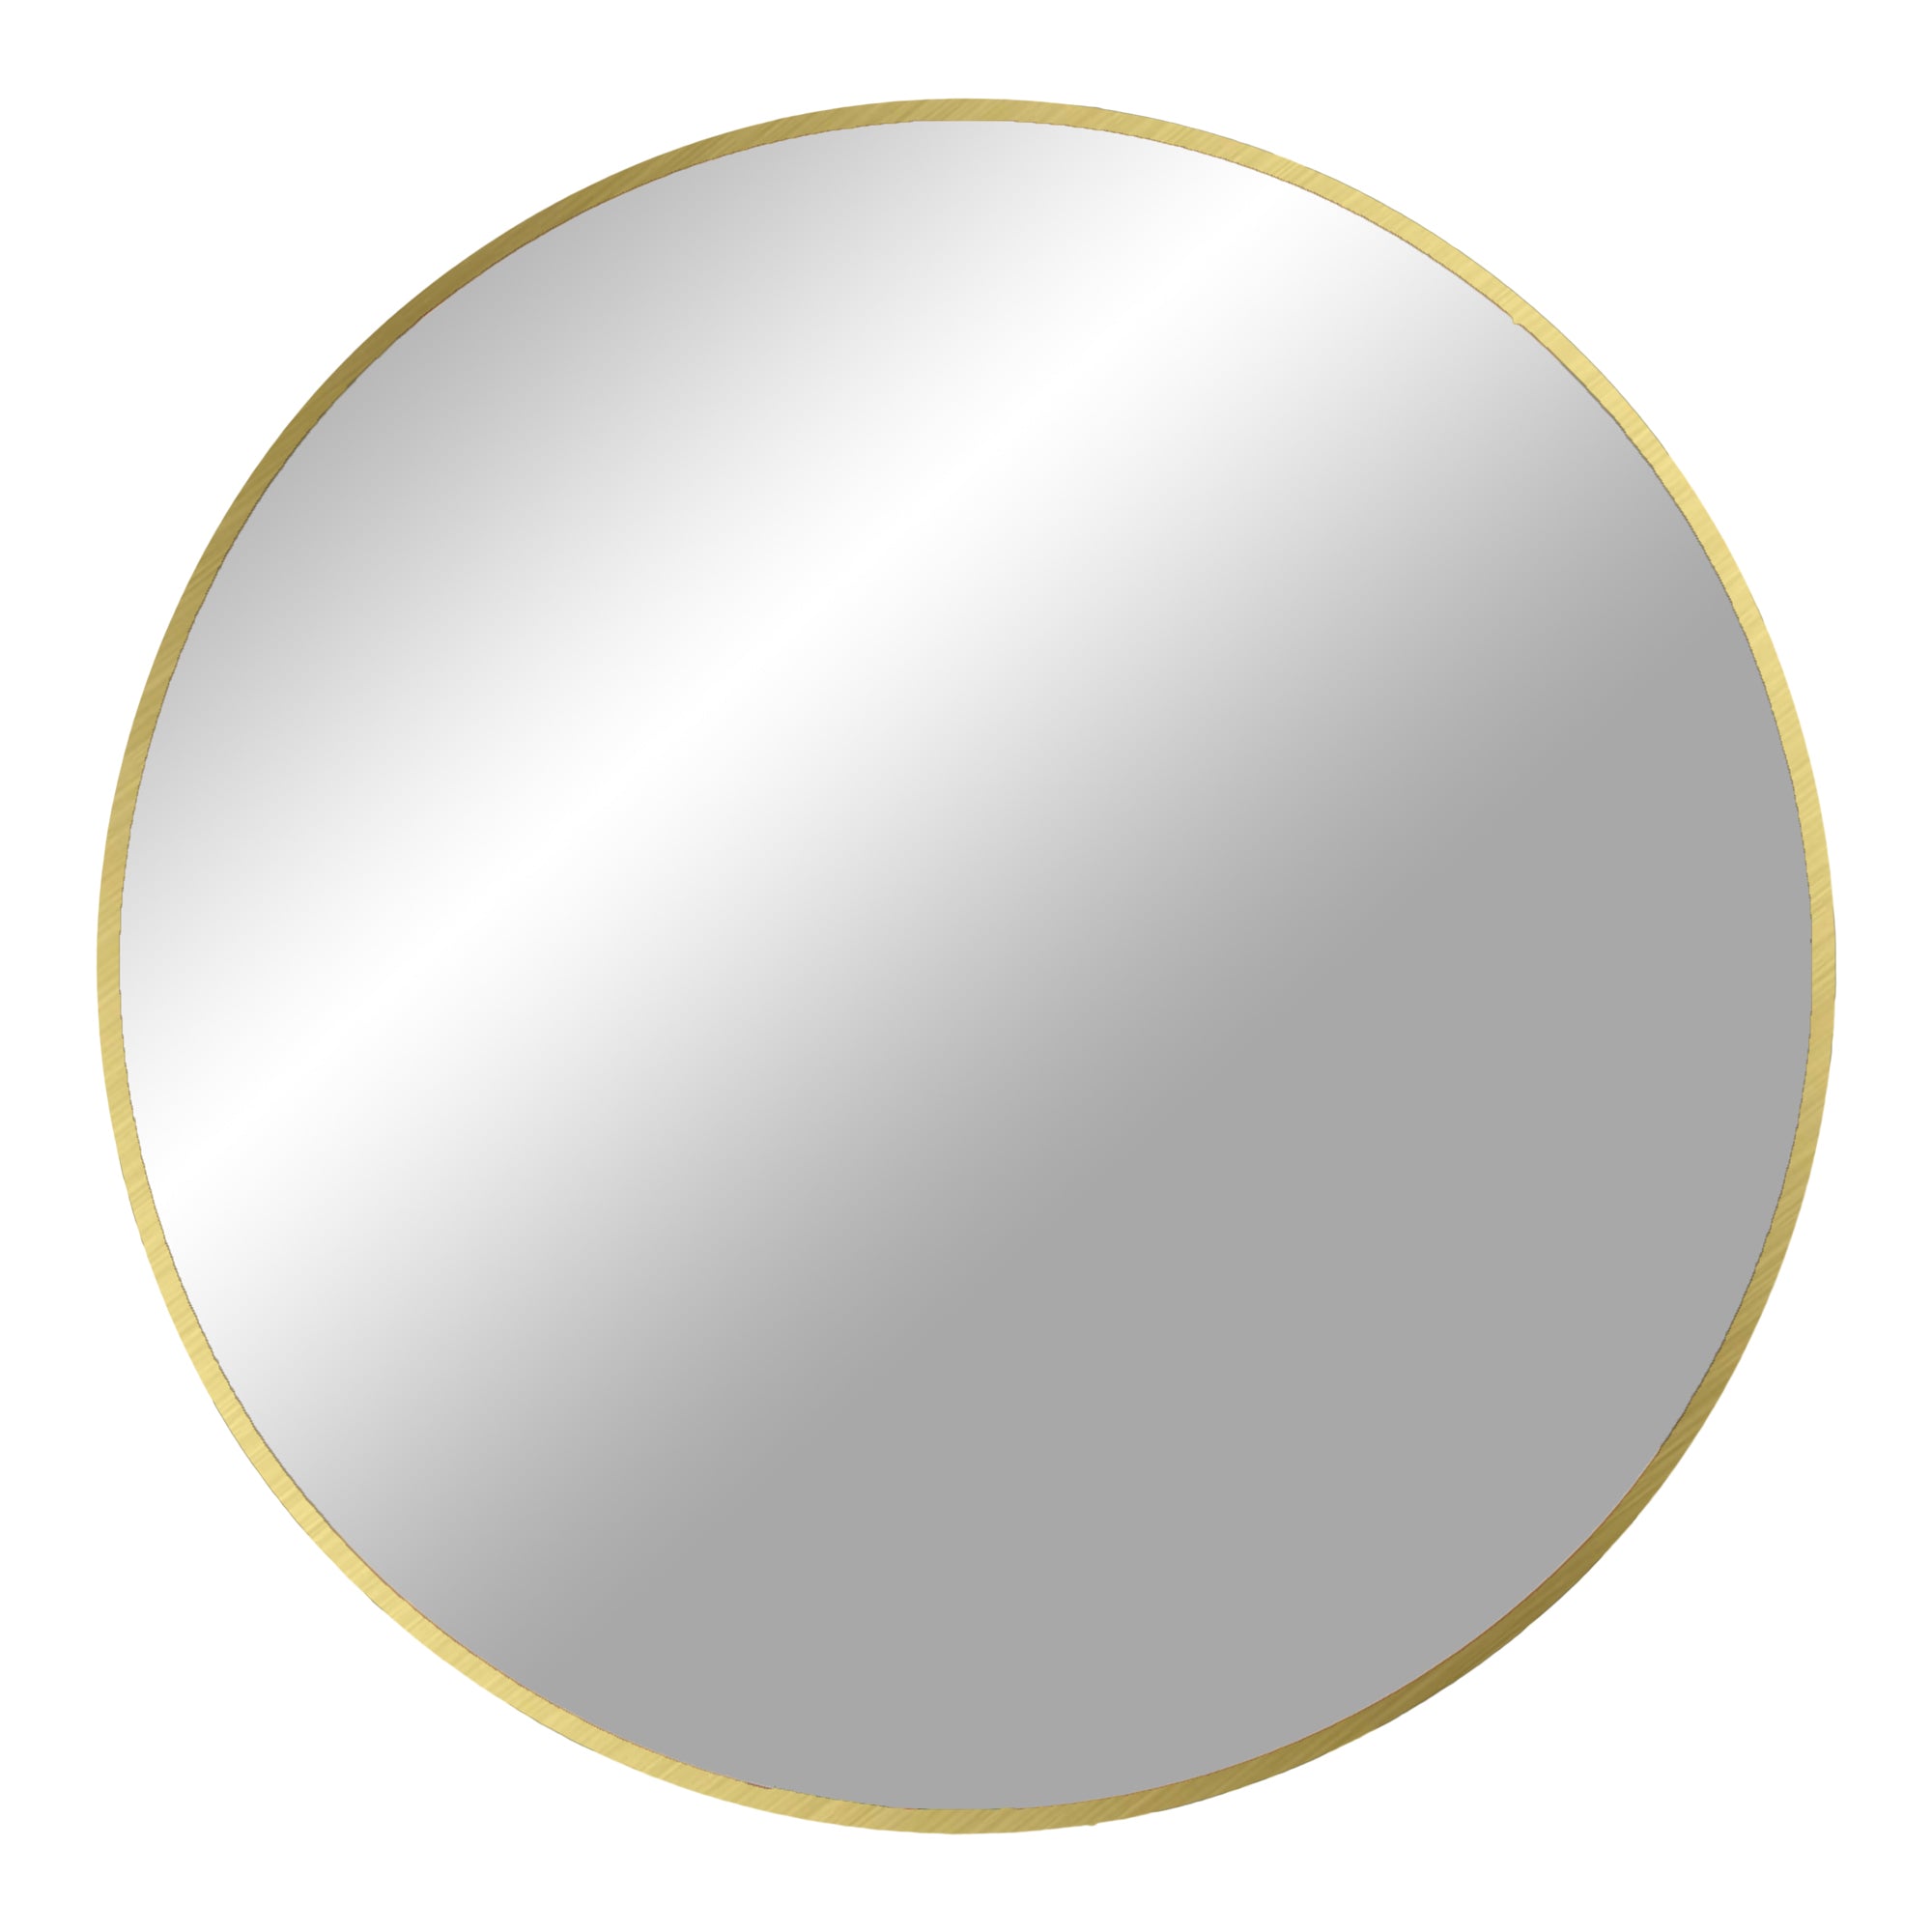 11: Madrid Spejl - Spejl i aluminium, messing look, Ø80 cm